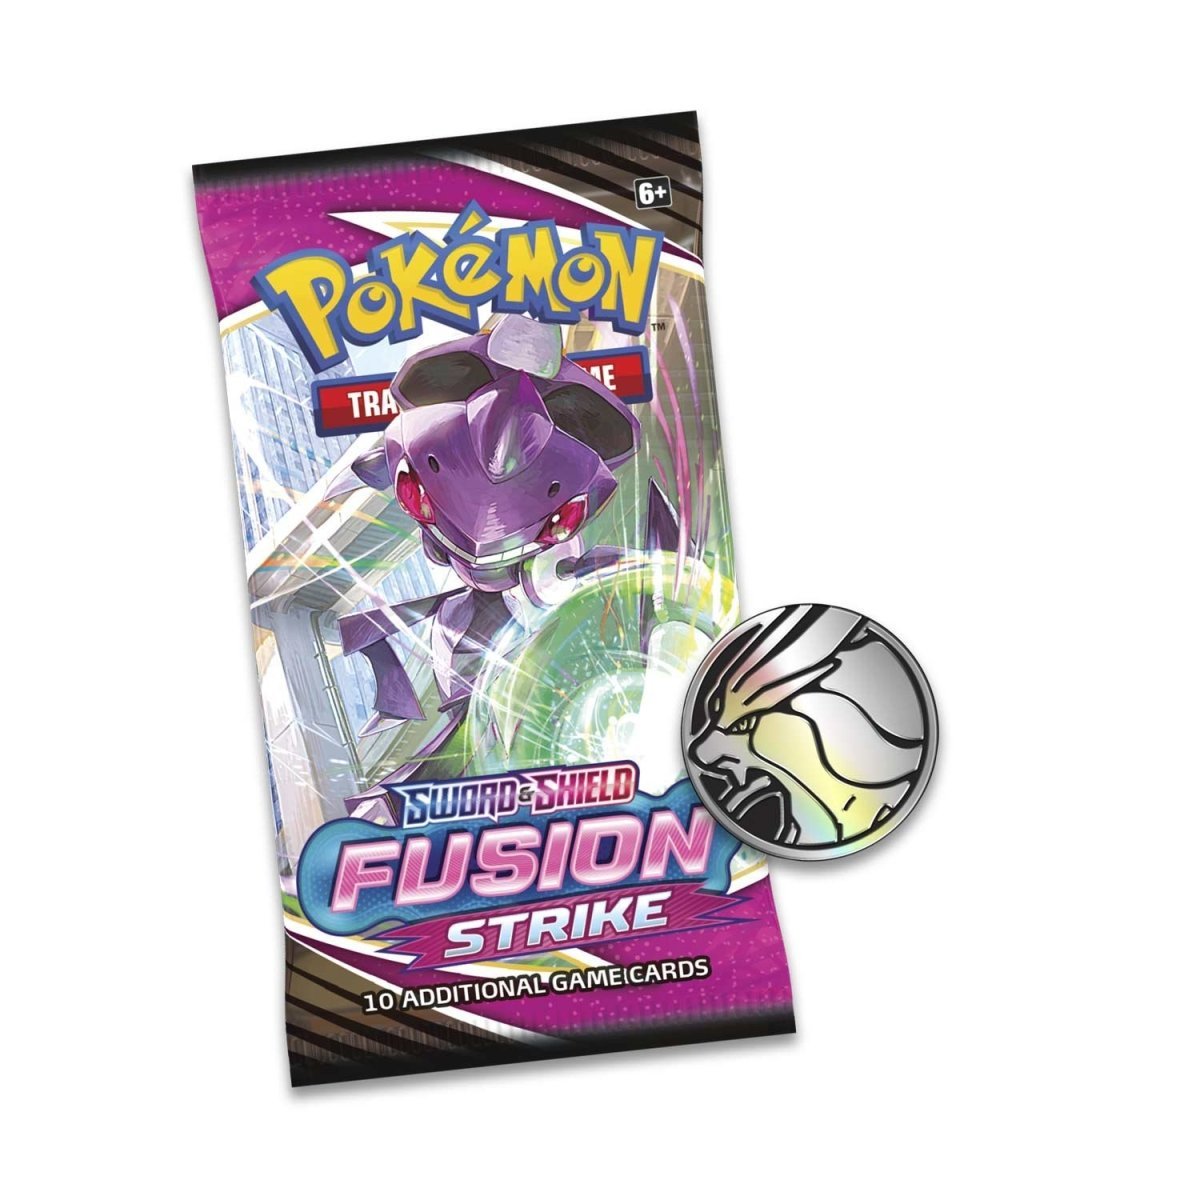 Pokémon: Sword & Shield - Fusion Strike Three-Booster Blister Pack (Eevee or Espeon) - PokeRvm